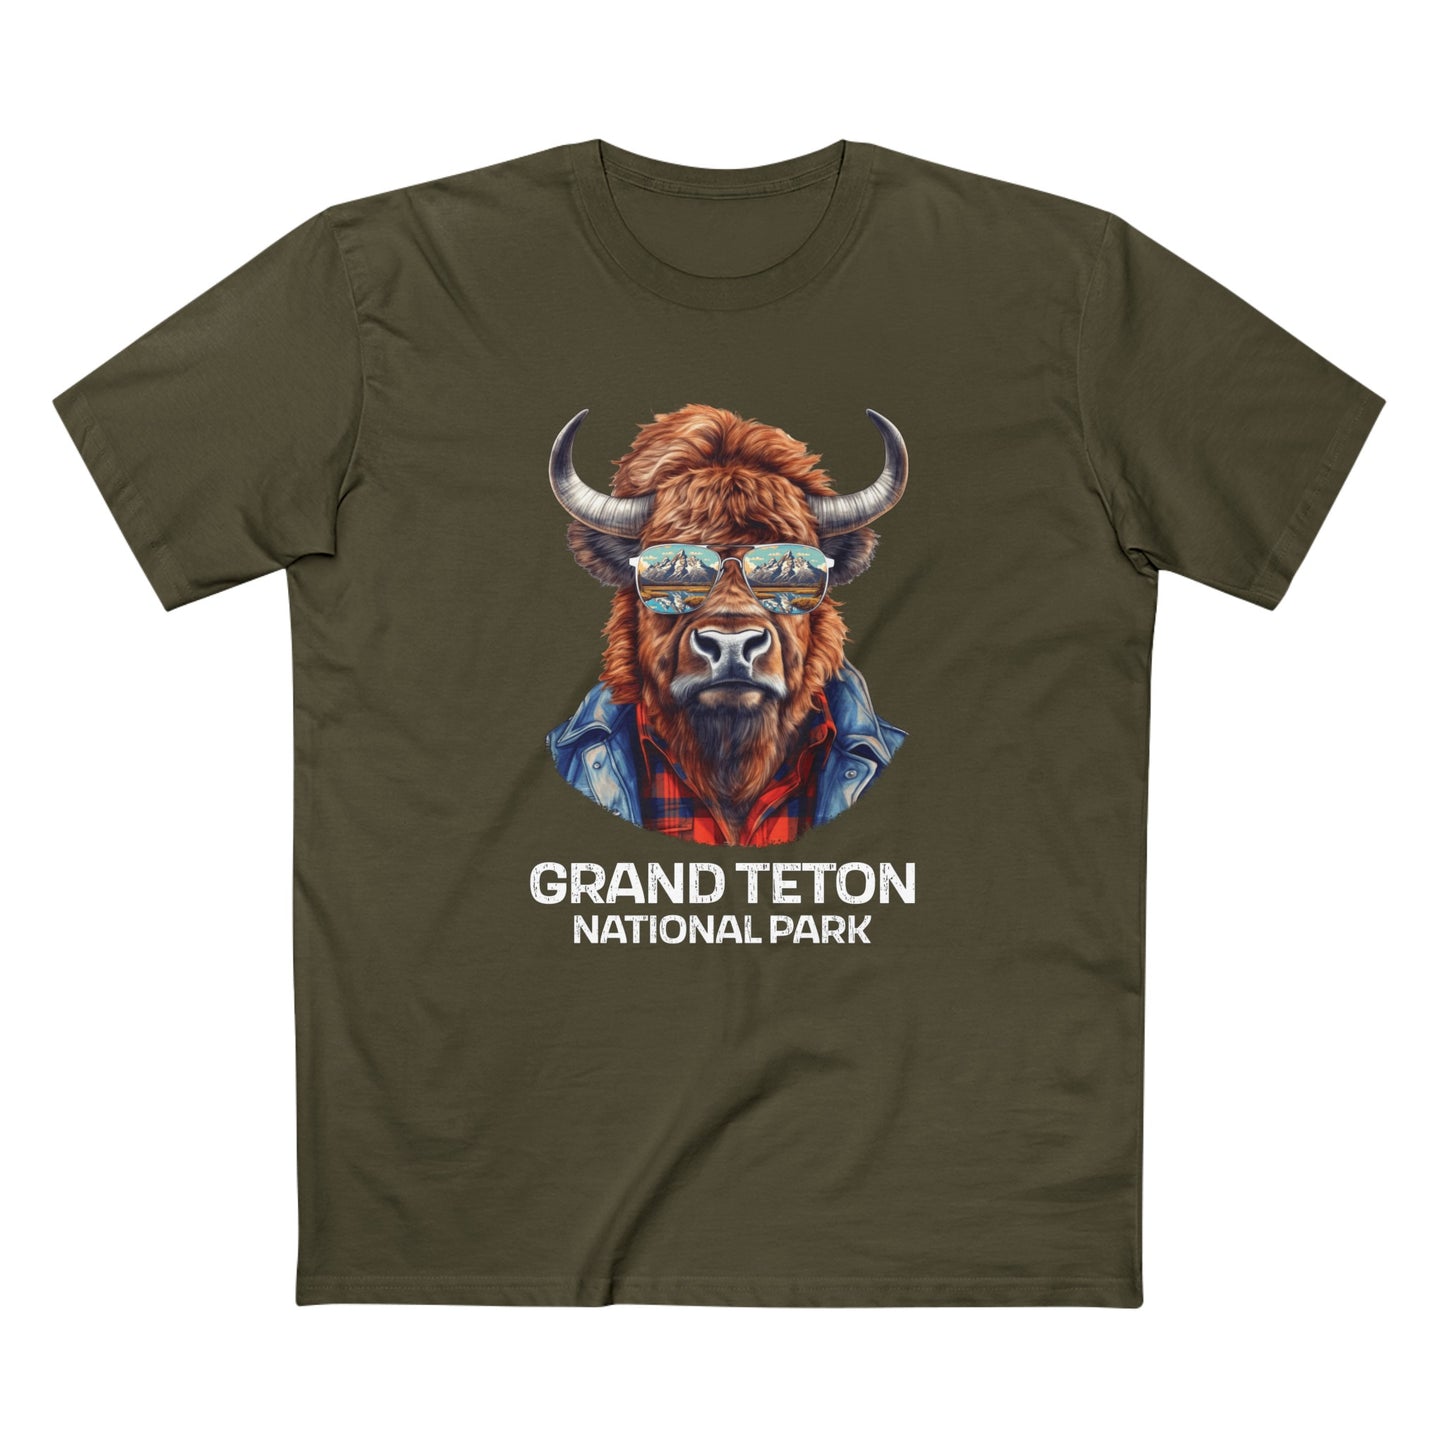 Grand Teton National Park T-Shirt - Bison